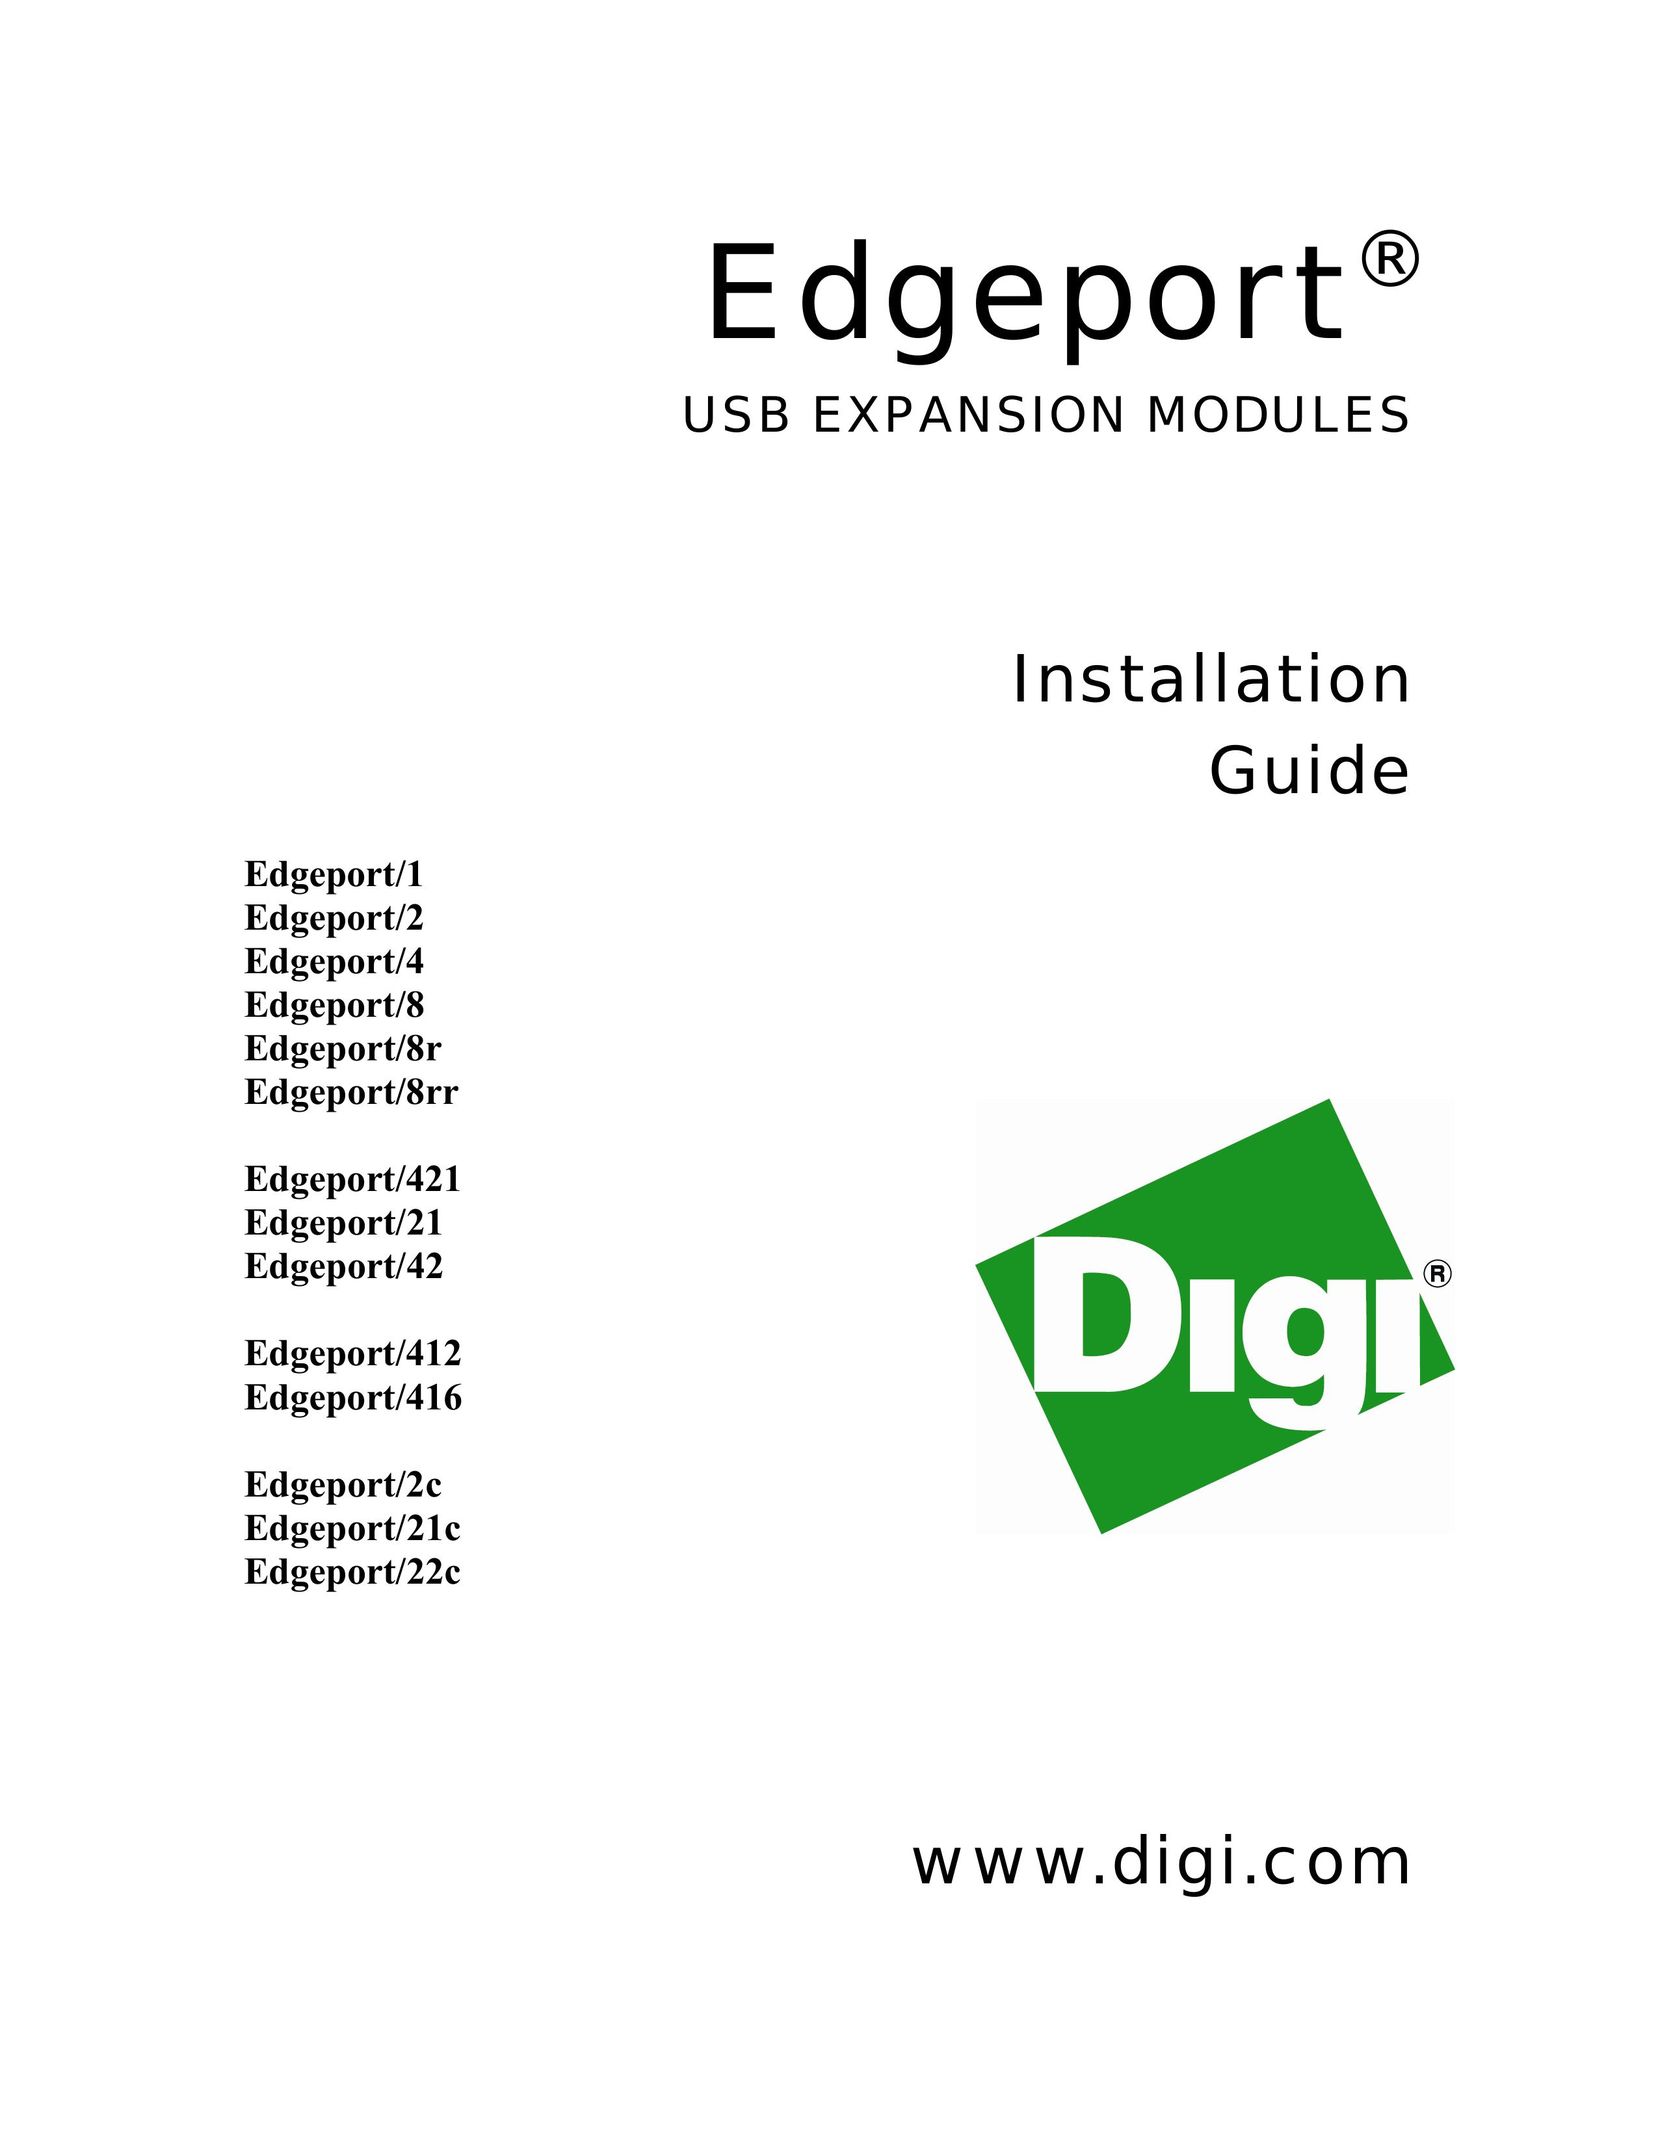 Digi Edgeport/8rr Network Card User Manual